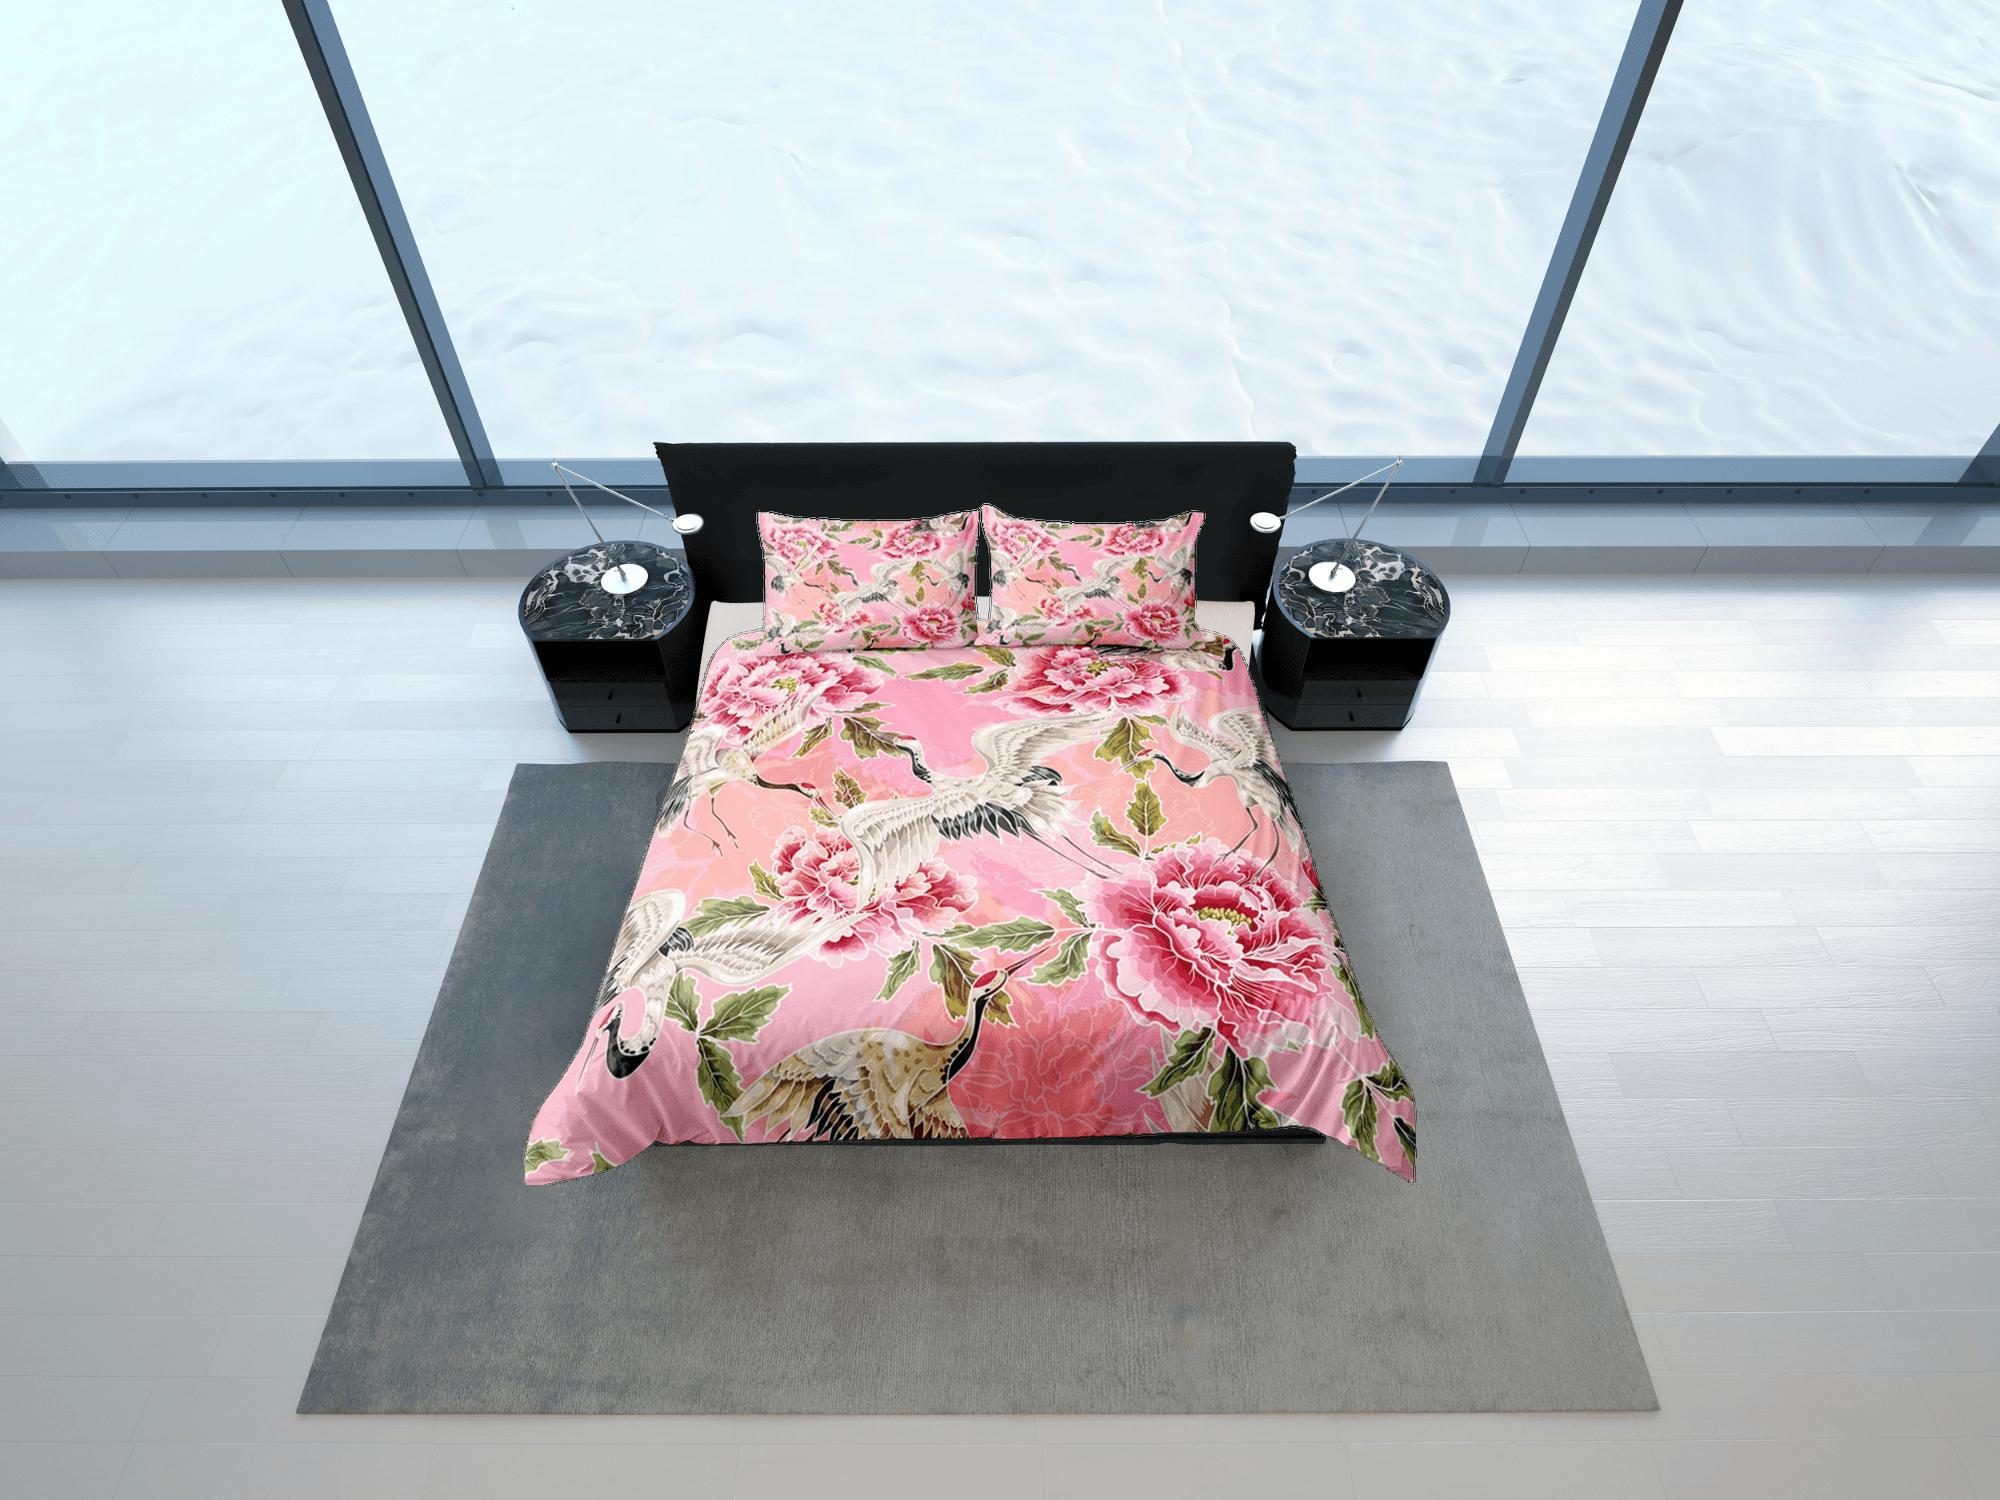 daintyduvet Pink Duvet Cover Set Floral Prints, Japanese Art Crane Bird Comforter Cover Set Pillowcase | Size King, Queen, Full, Twin & Single Bedding